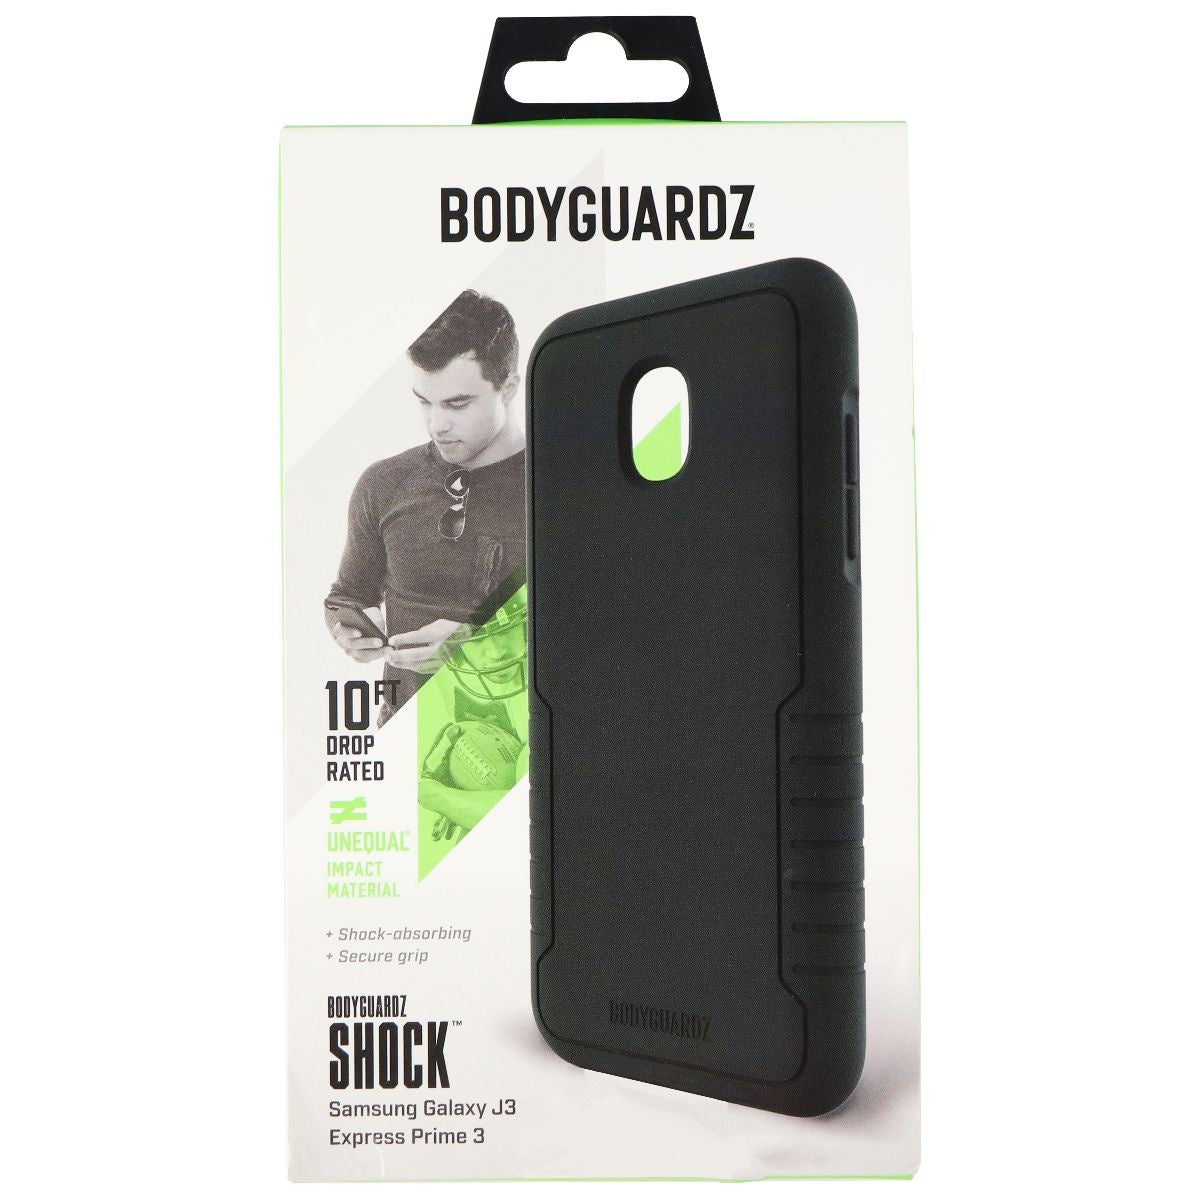 BodyGuardz Shock Case for Samsung Galaxy J3 (2018)/Express Prime 3 - Black Cell Phone - Cases, Covers & Skins BODYGUARDZ    - Simple Cell Bulk Wholesale Pricing - USA Seller